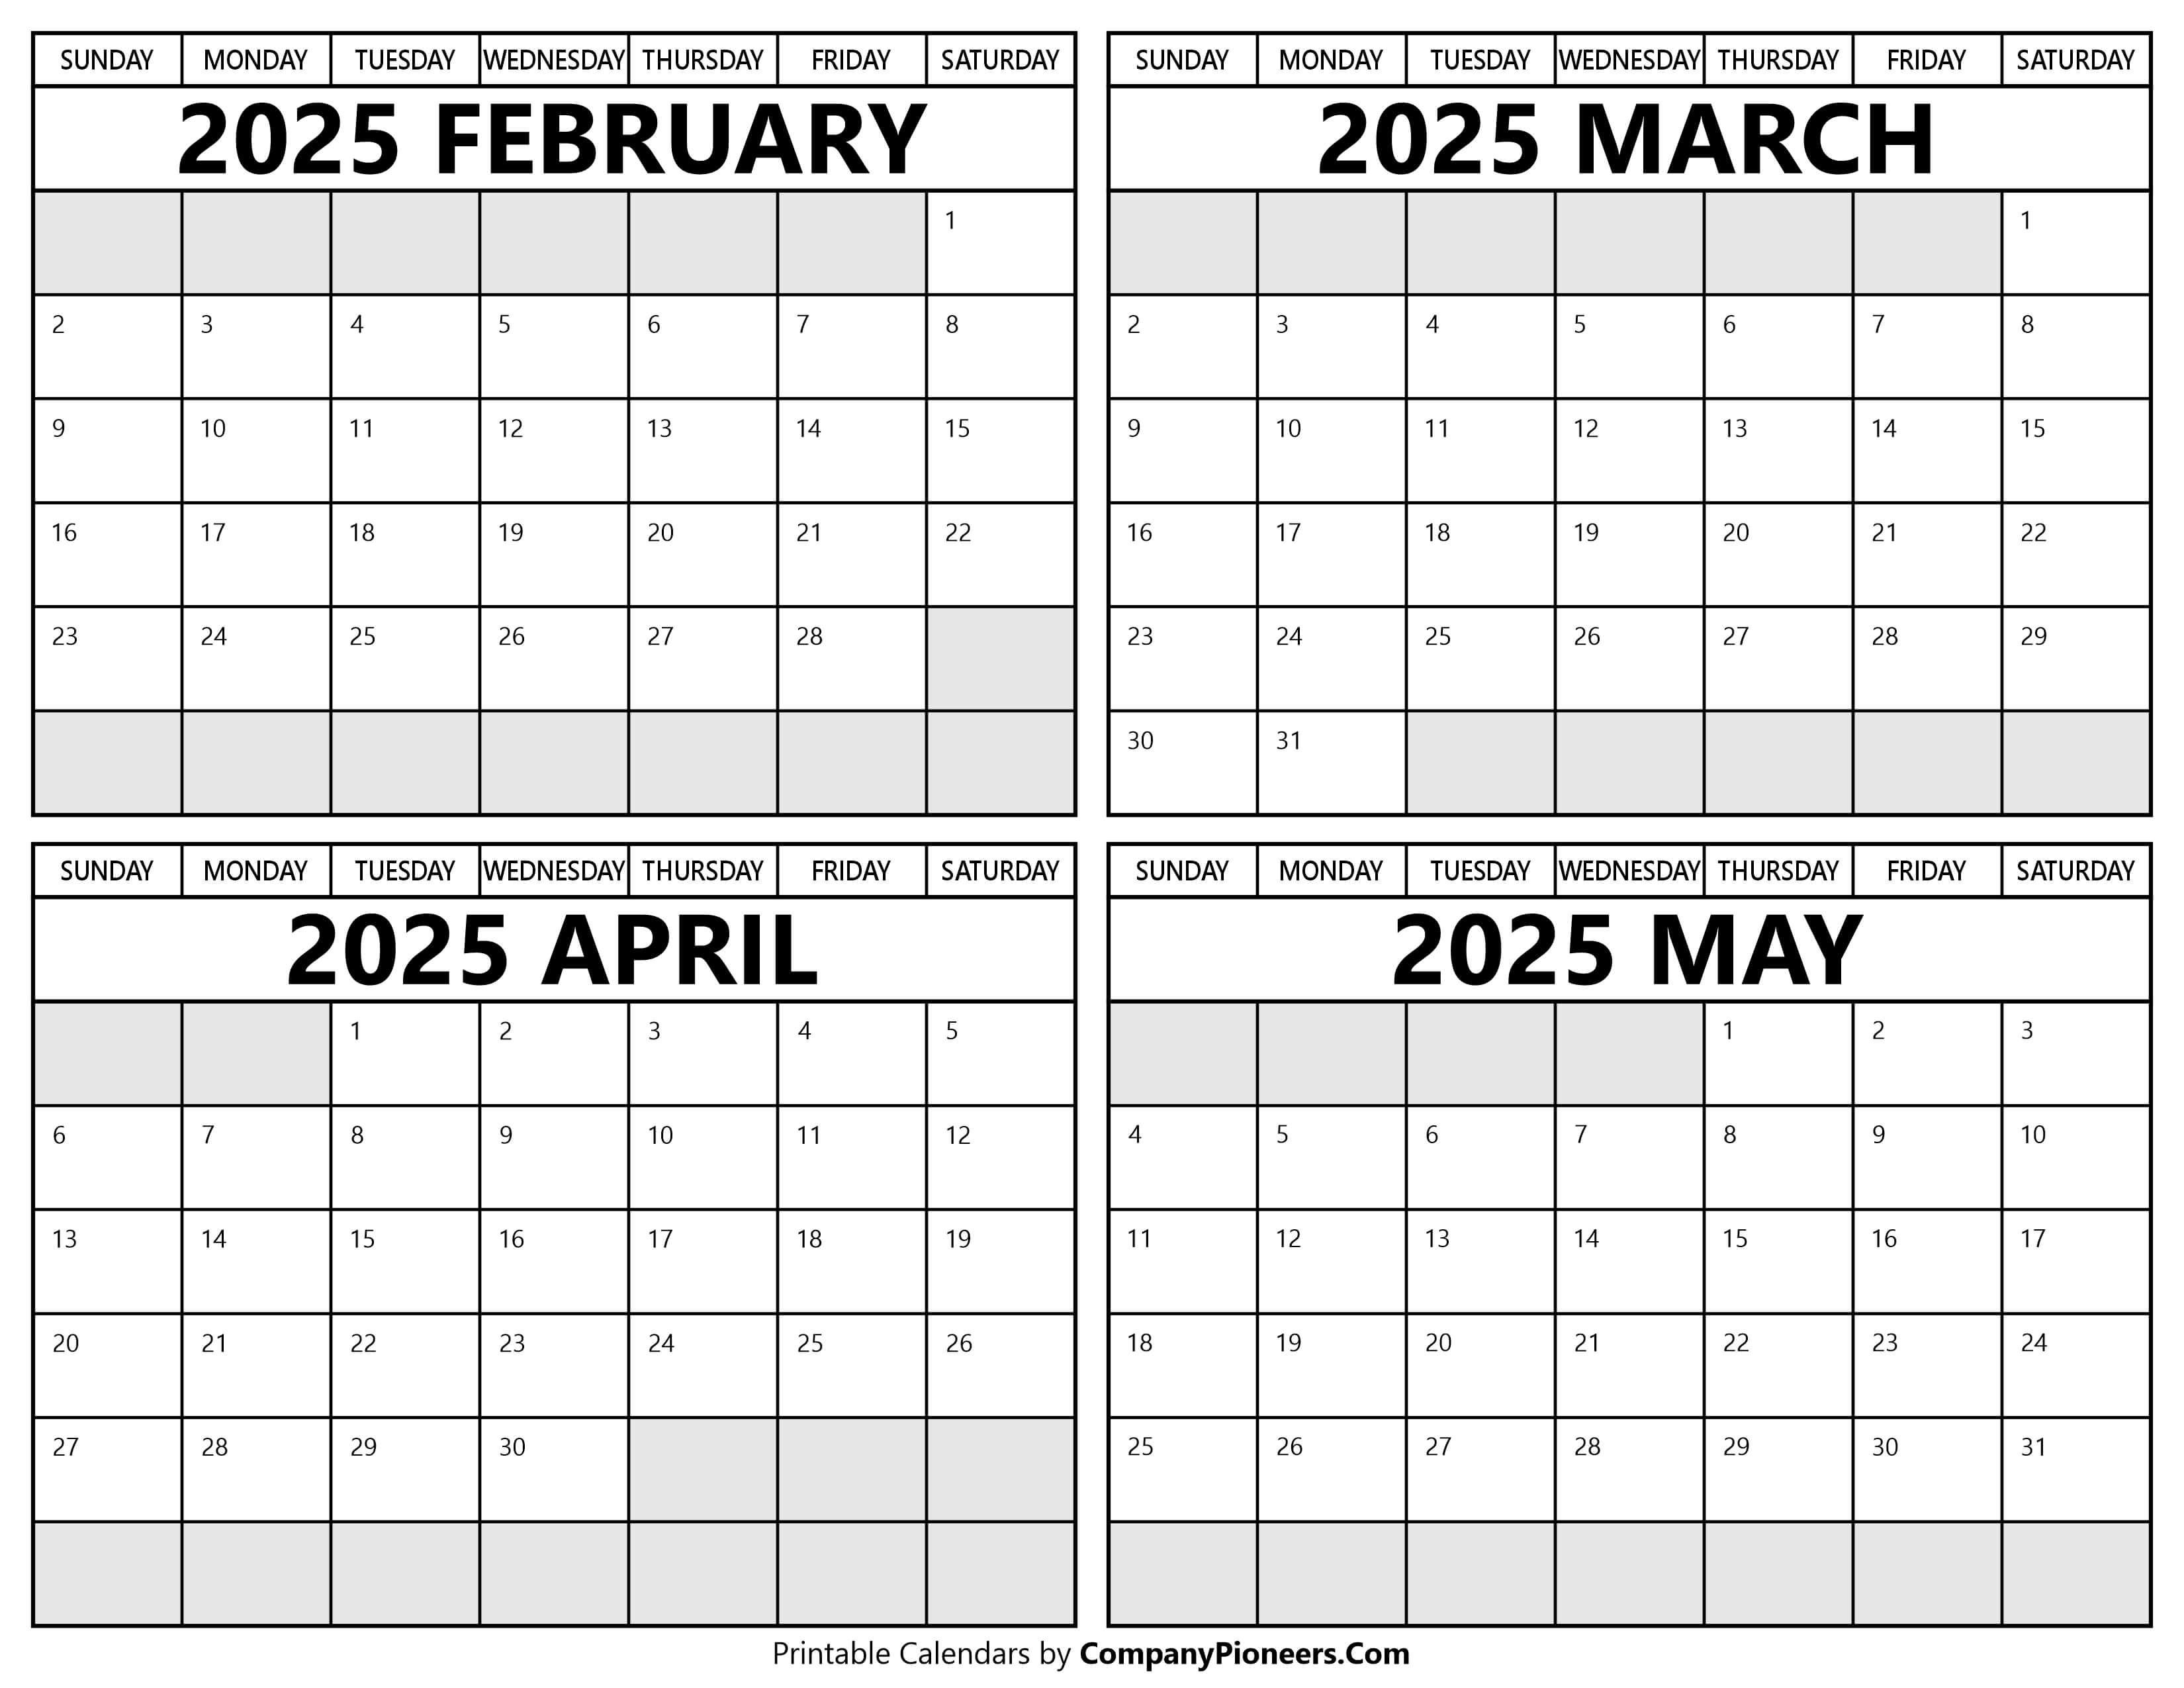 Printable February to May 2025 Calendars